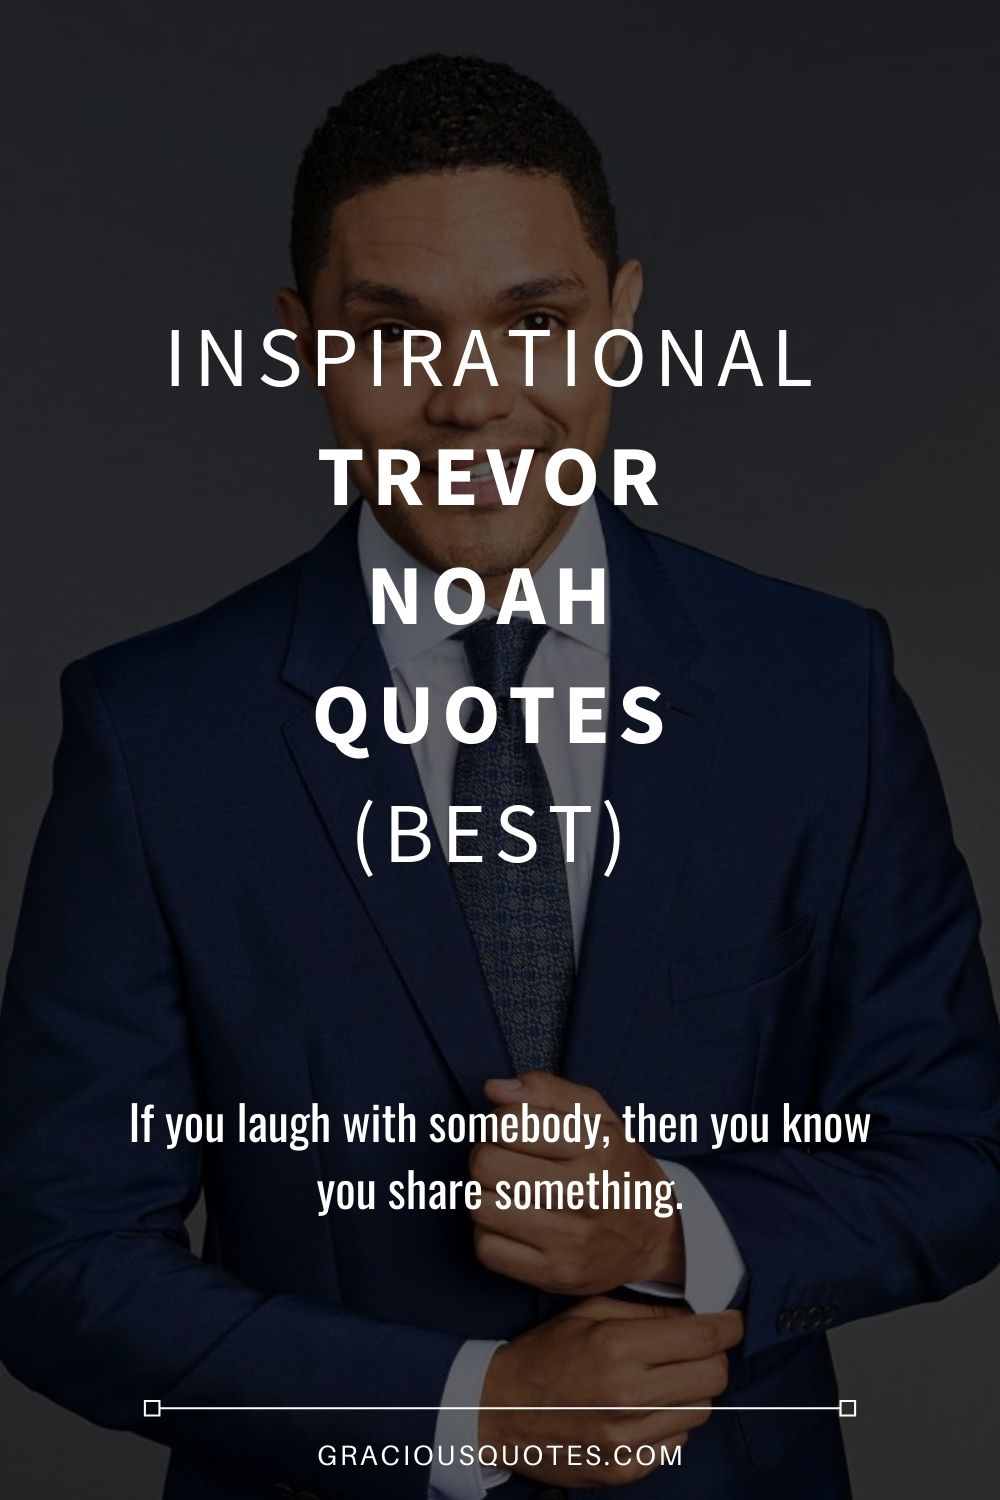 Inspirational Trevor Noah Quotes (BEST) - Gracious Quotes